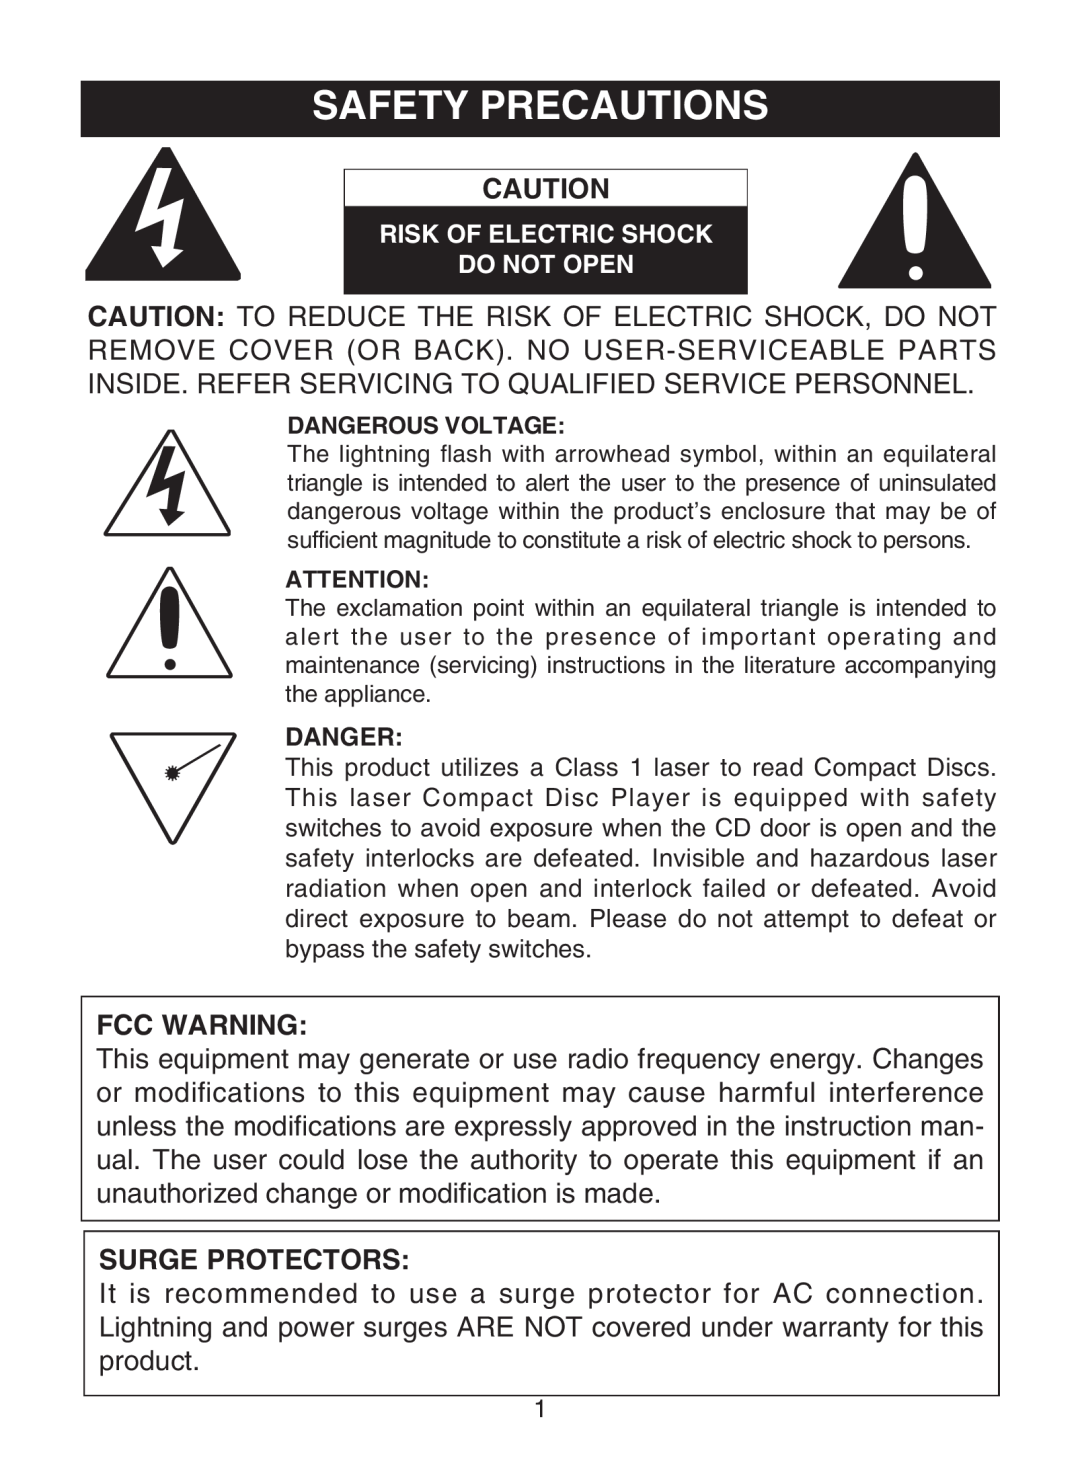 Memorex MD6483 manual Safety Precautions, Fcc Warning, Surge Protectors 